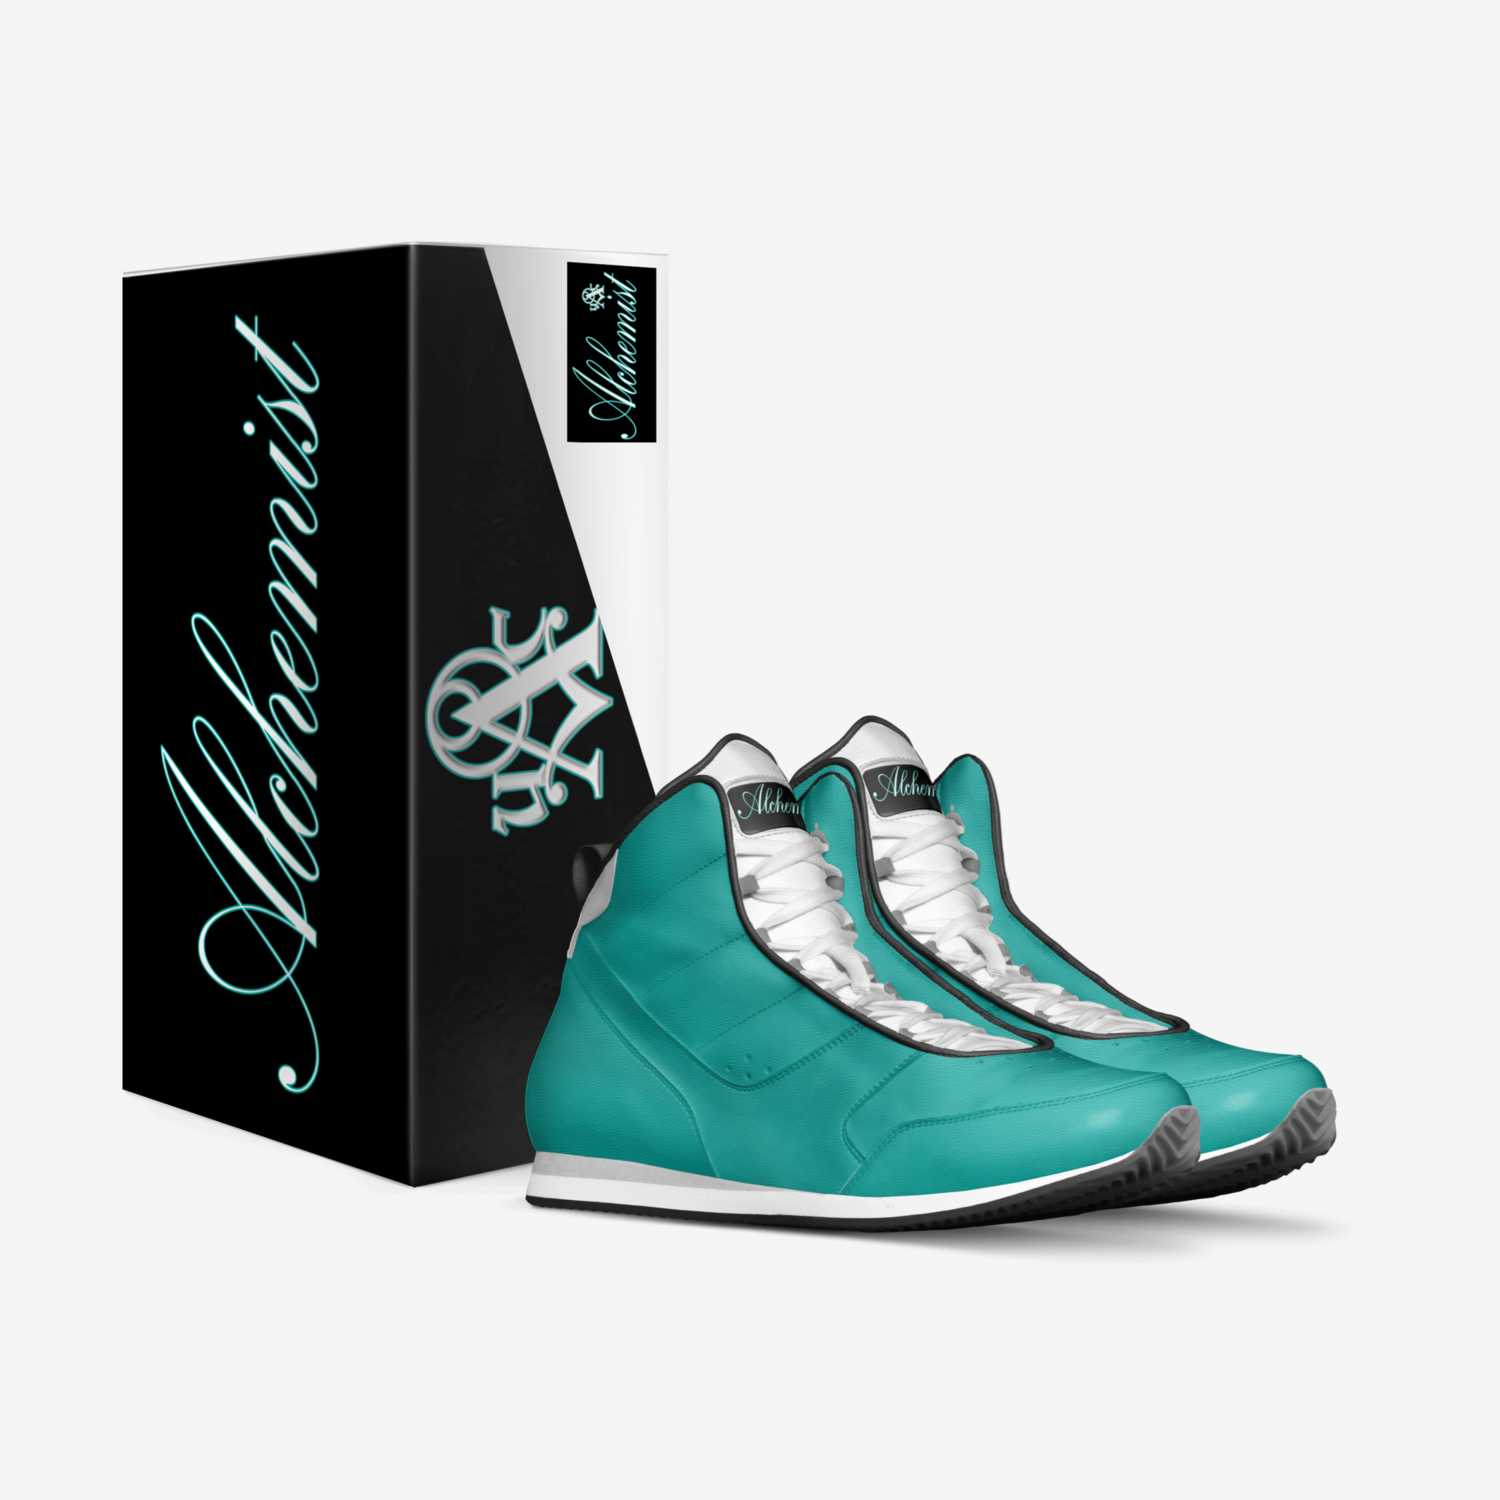 Flu Season custom made in Italy shoes by Urban Alchemist Clothing | Box view